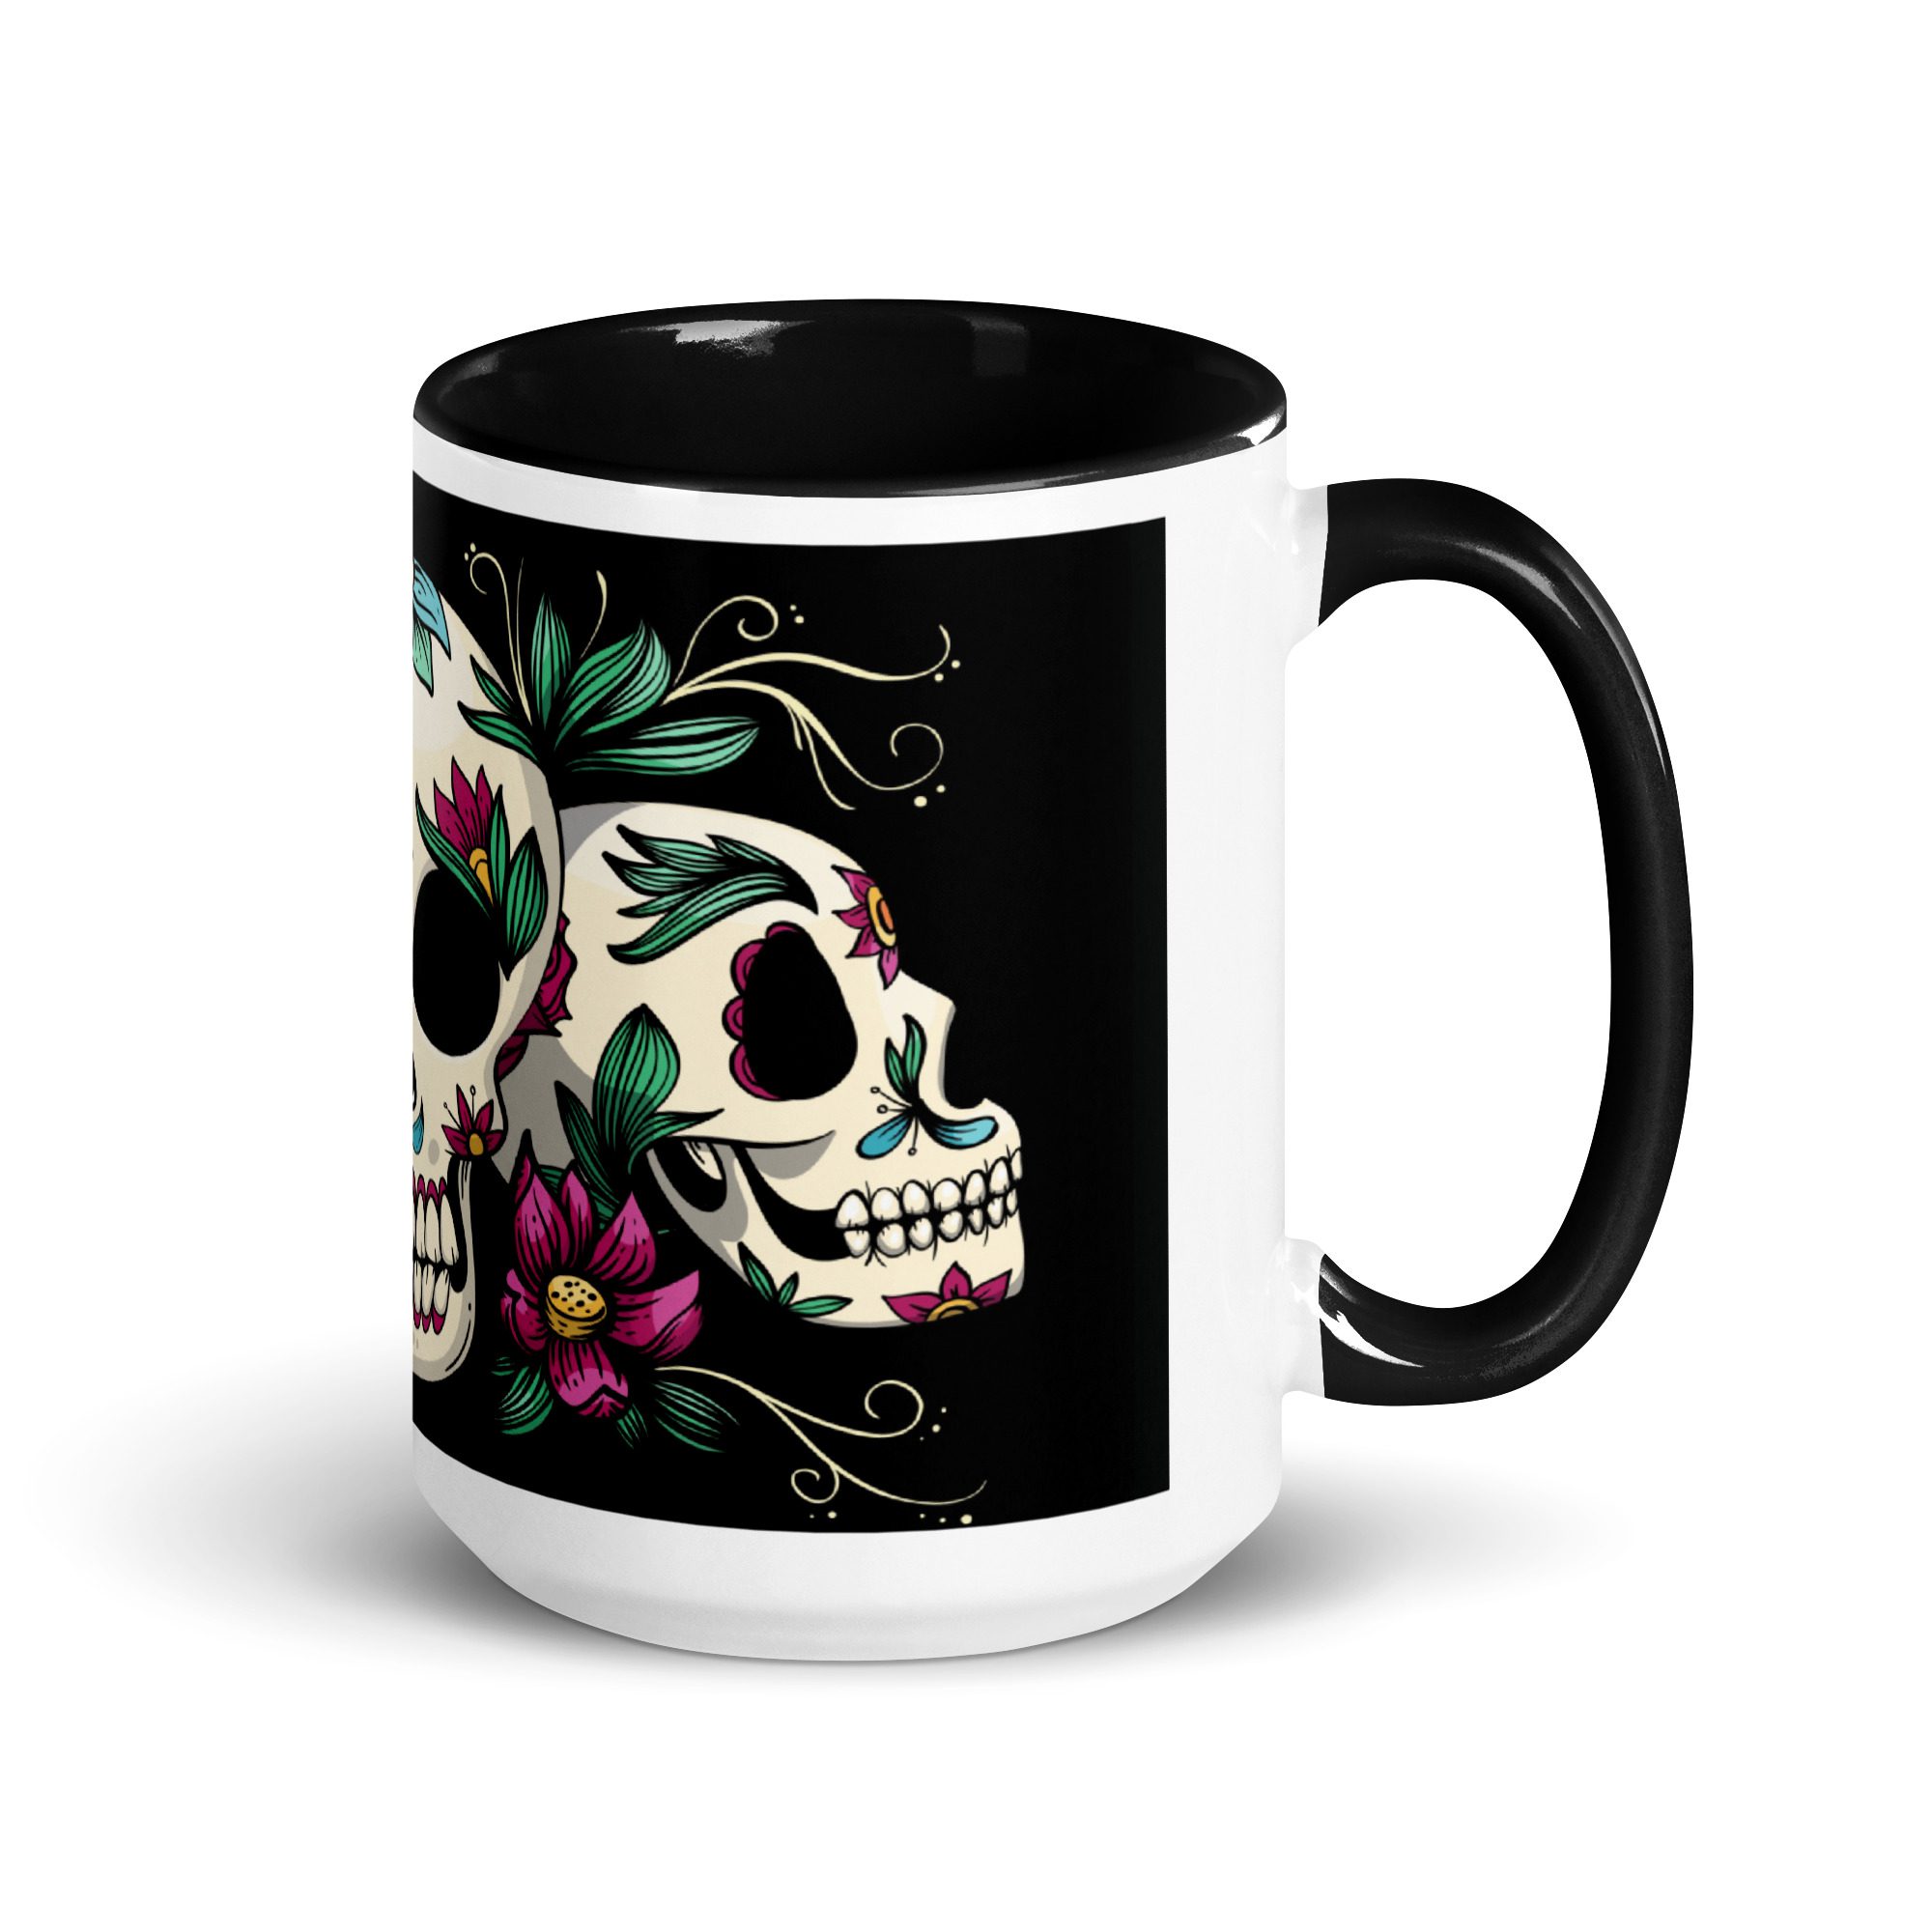 white ceramic mug with color inside black 15 oz right 65367417be6d1